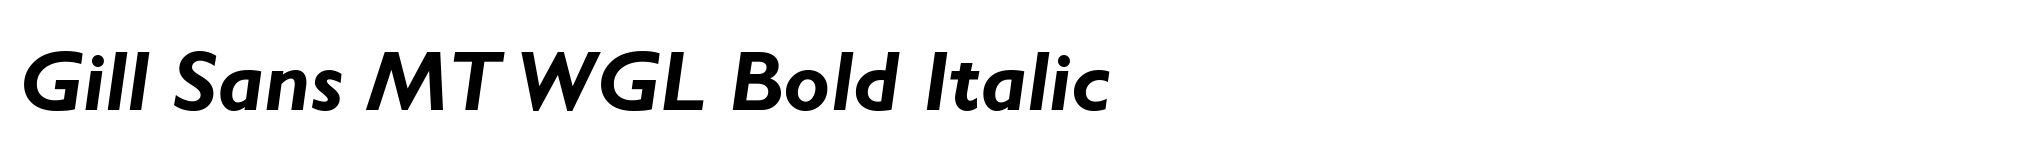 Gill Sans MT WGL Bold Italic image